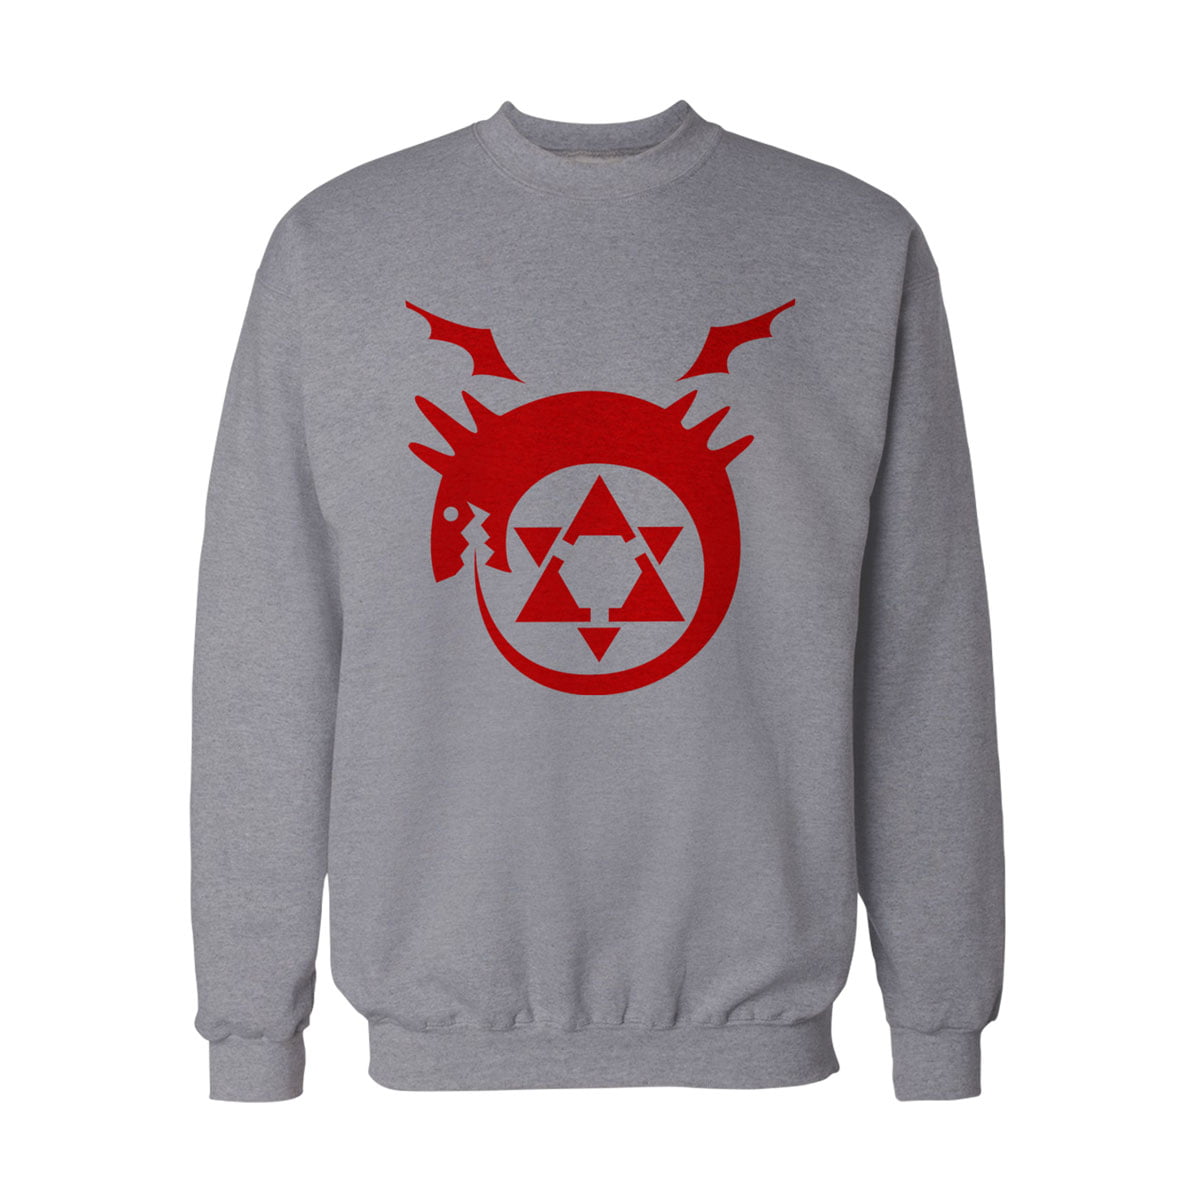 Fma logo sweatshirt g - fullmetal alchemist unisex sweatshirt - figurex